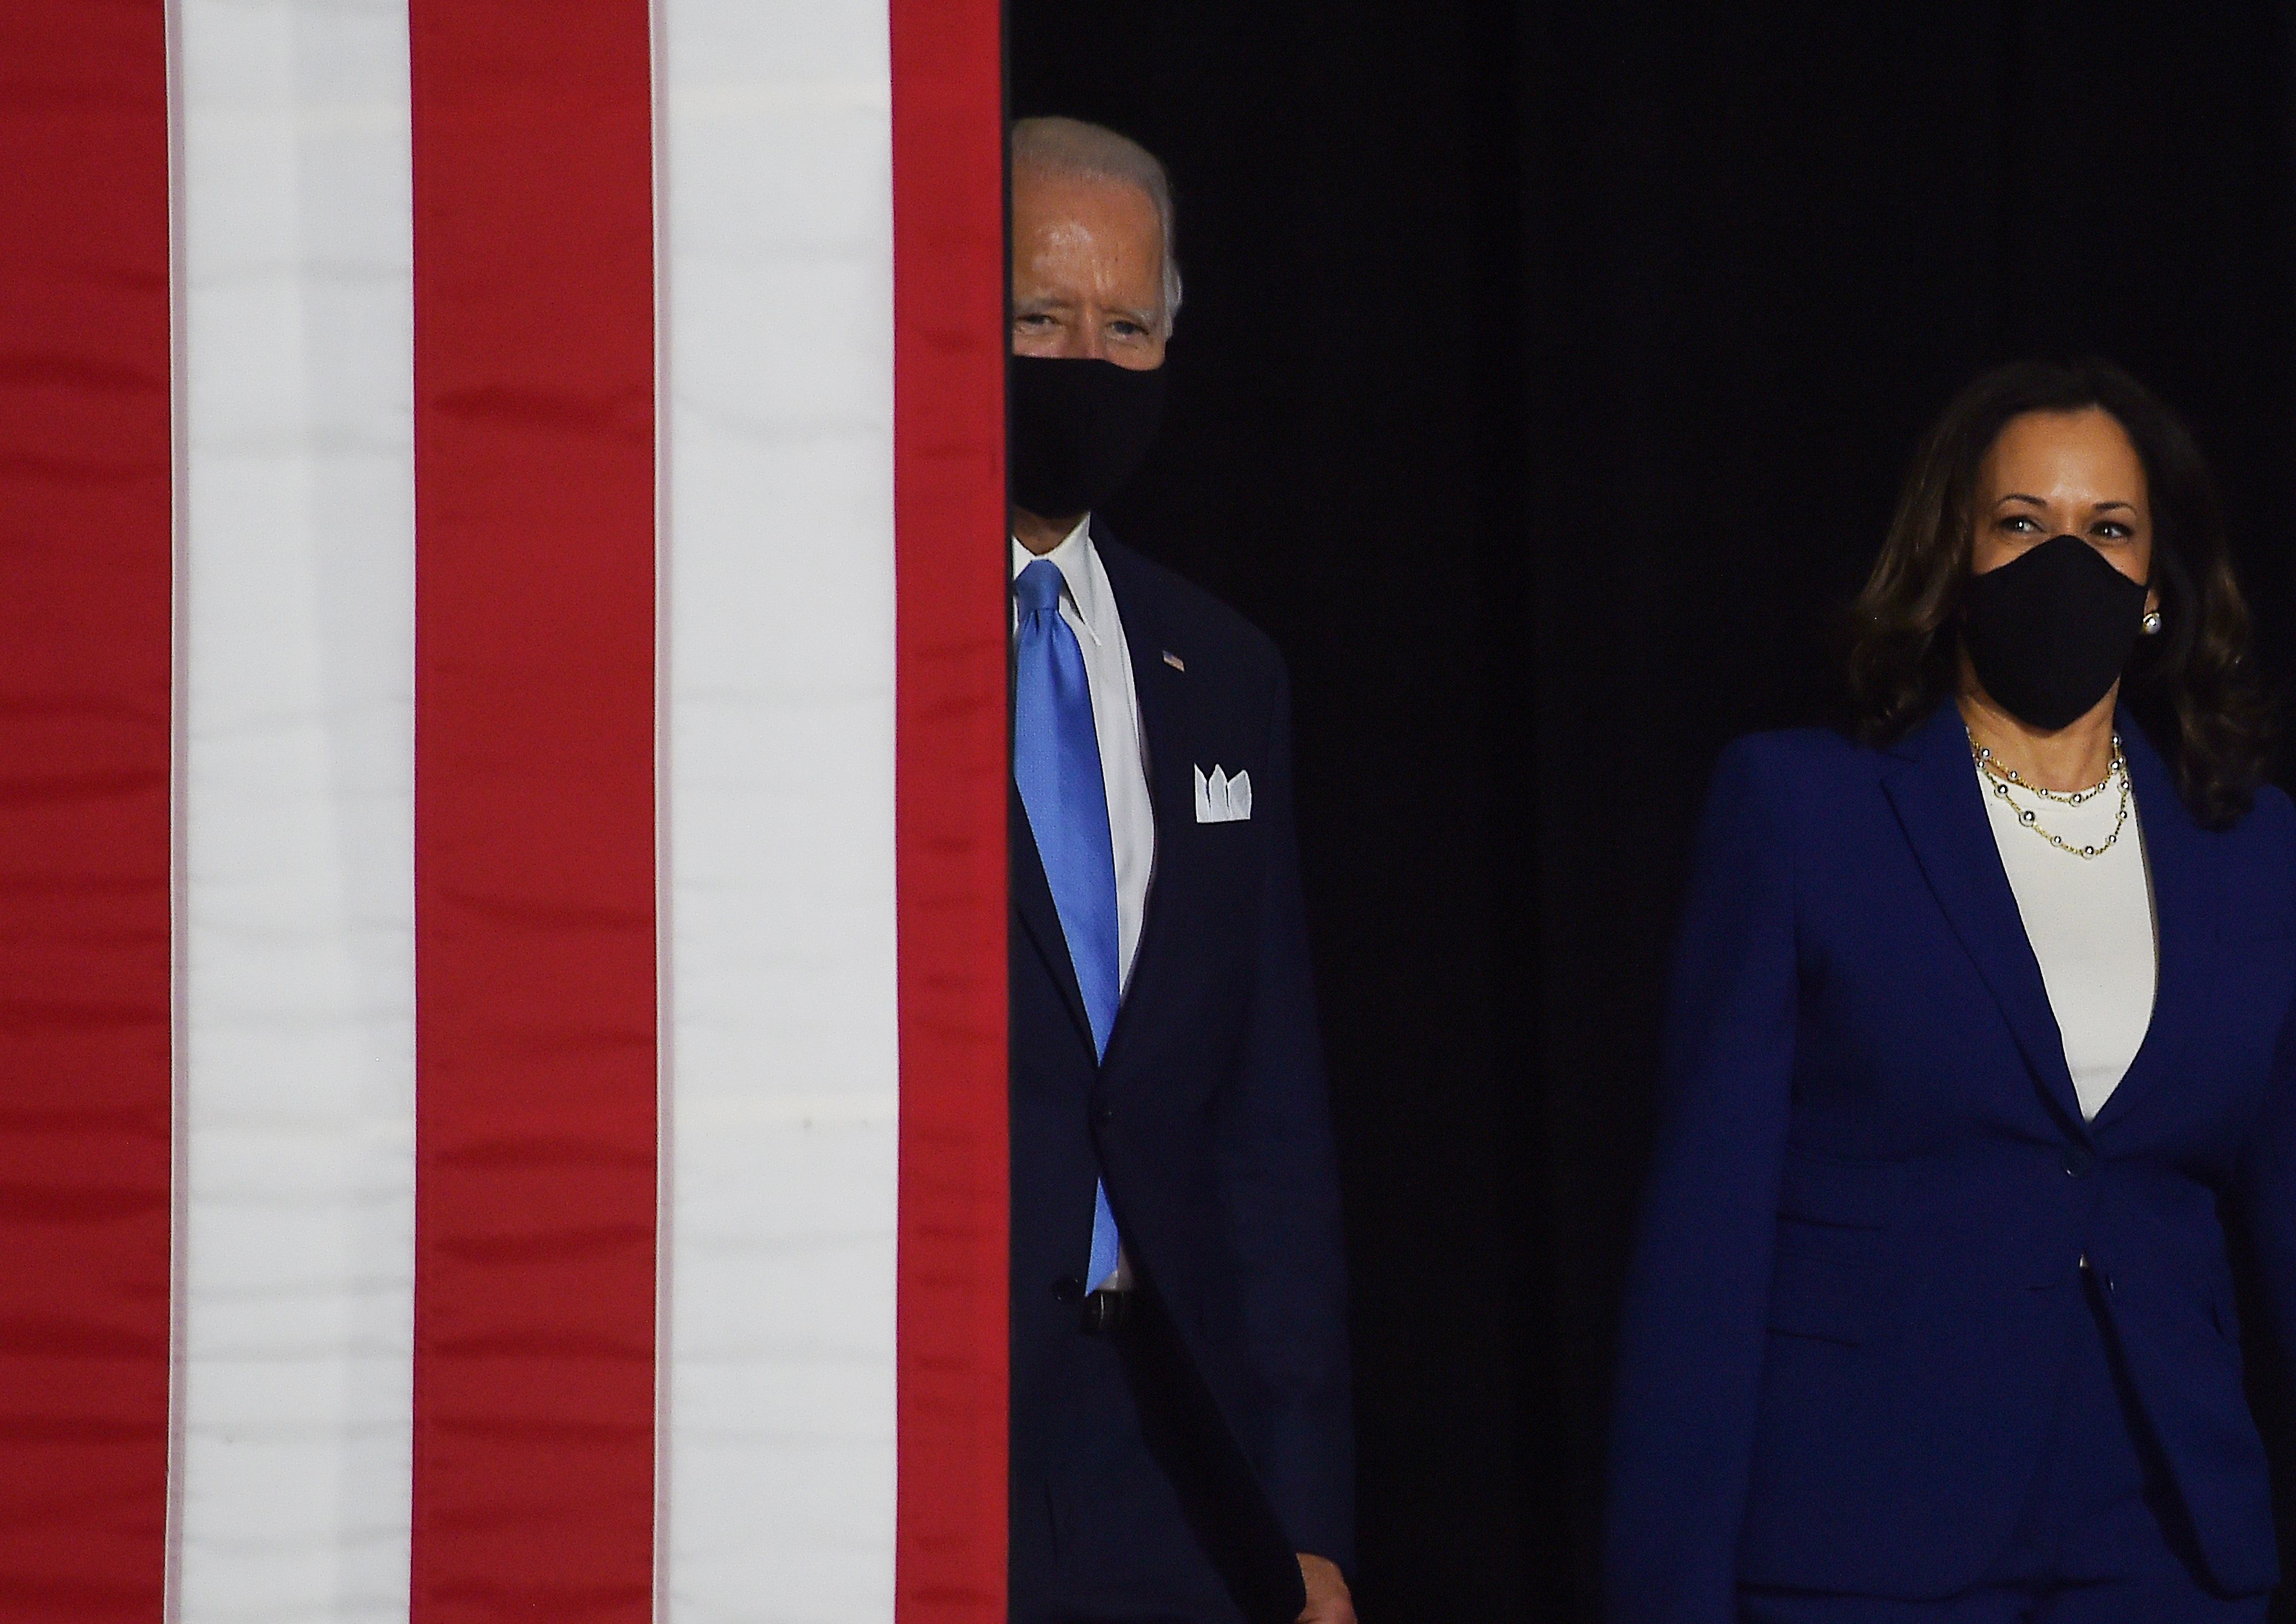 Joe Biden and Kamala Harris walking out from behind a flag-stripped banner.